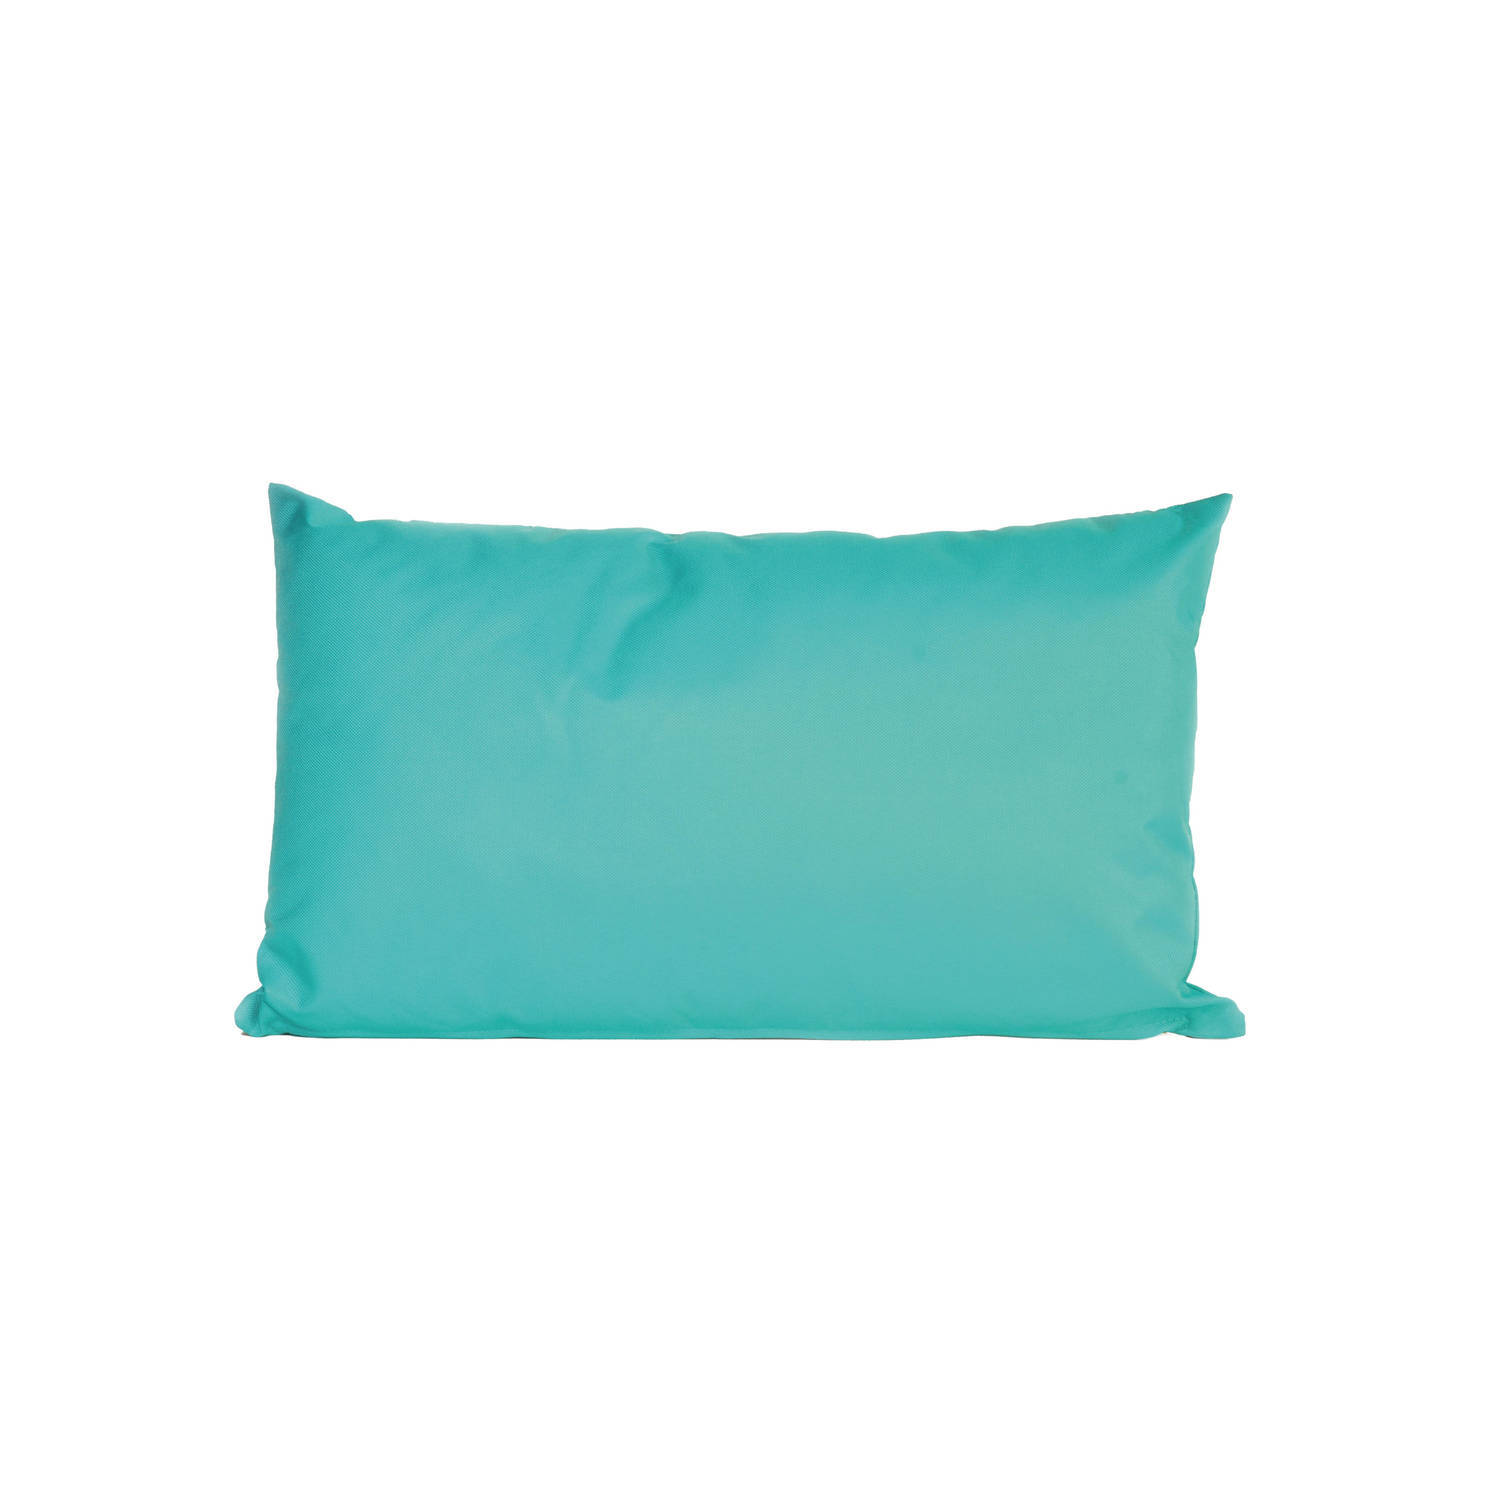 FMK2 Poolgear bank/sier kussens voor binnen en buiten in de kleur aqua blauw 30 x 50 cm - sierkussens